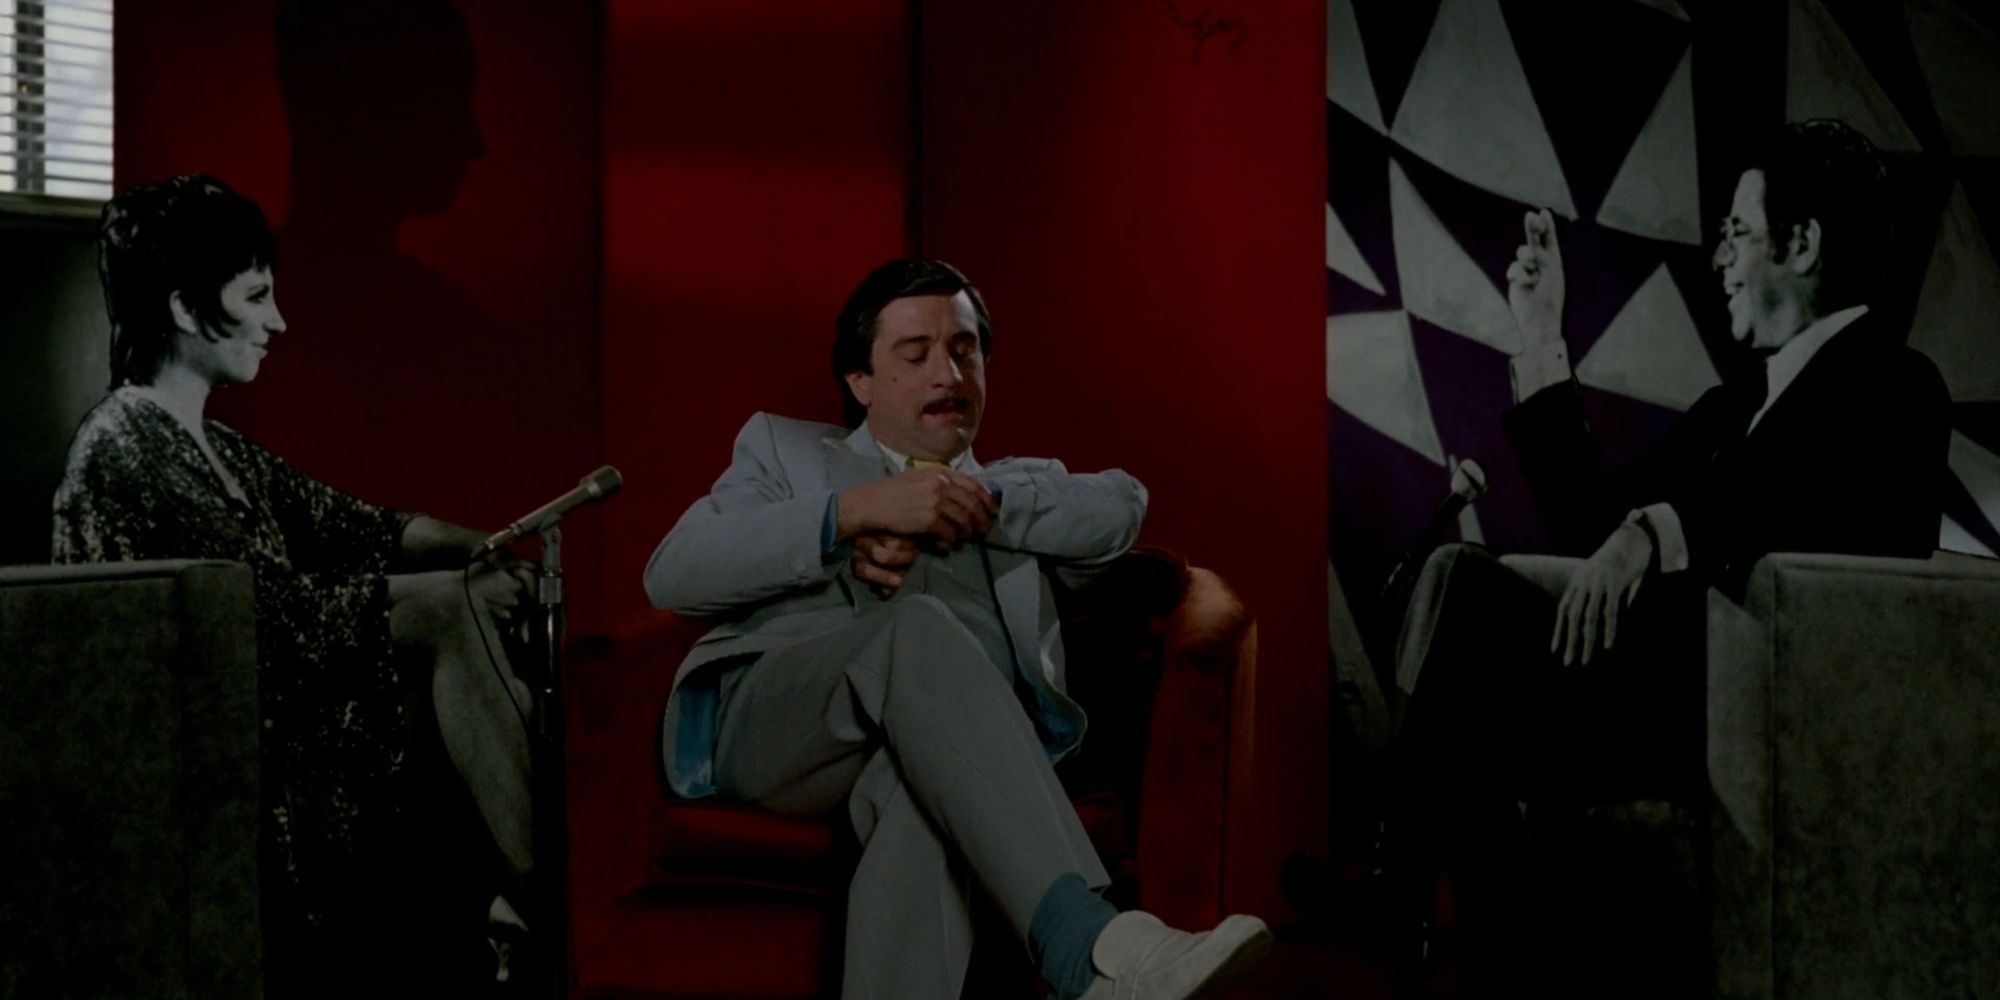 Robert De Niro as Rupert Pupkin in The King of Comedy (1982)